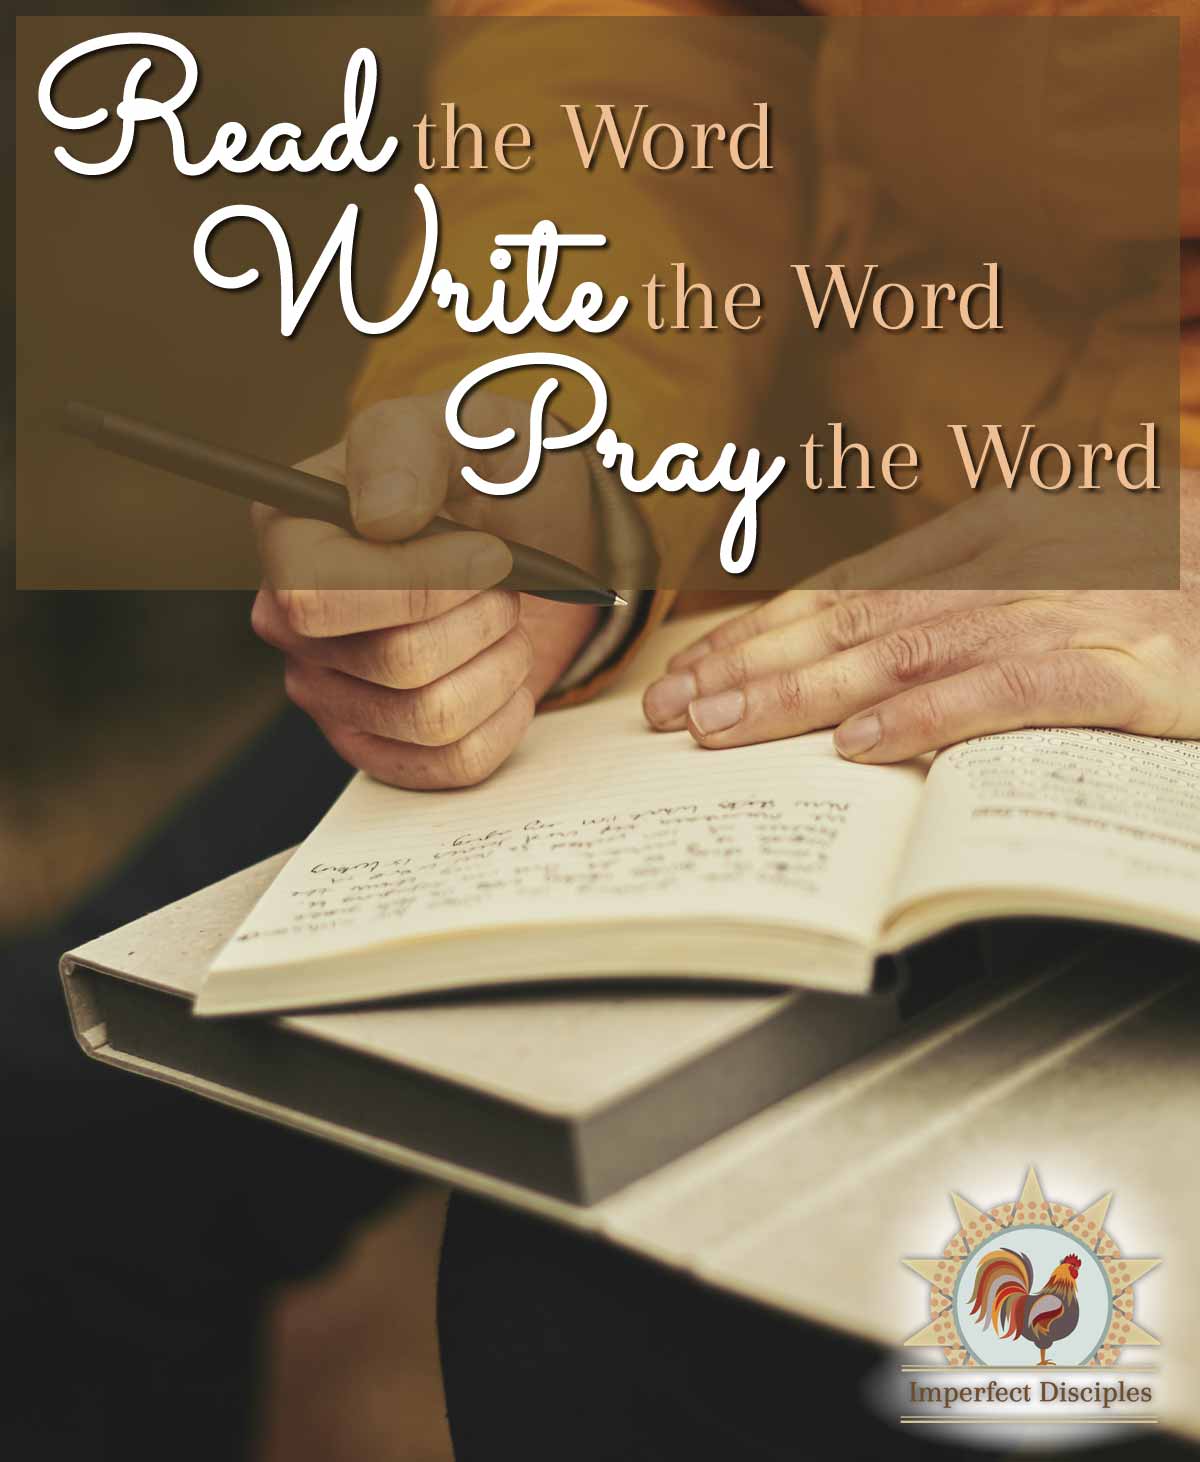 Read. Write. Pray. God's Word